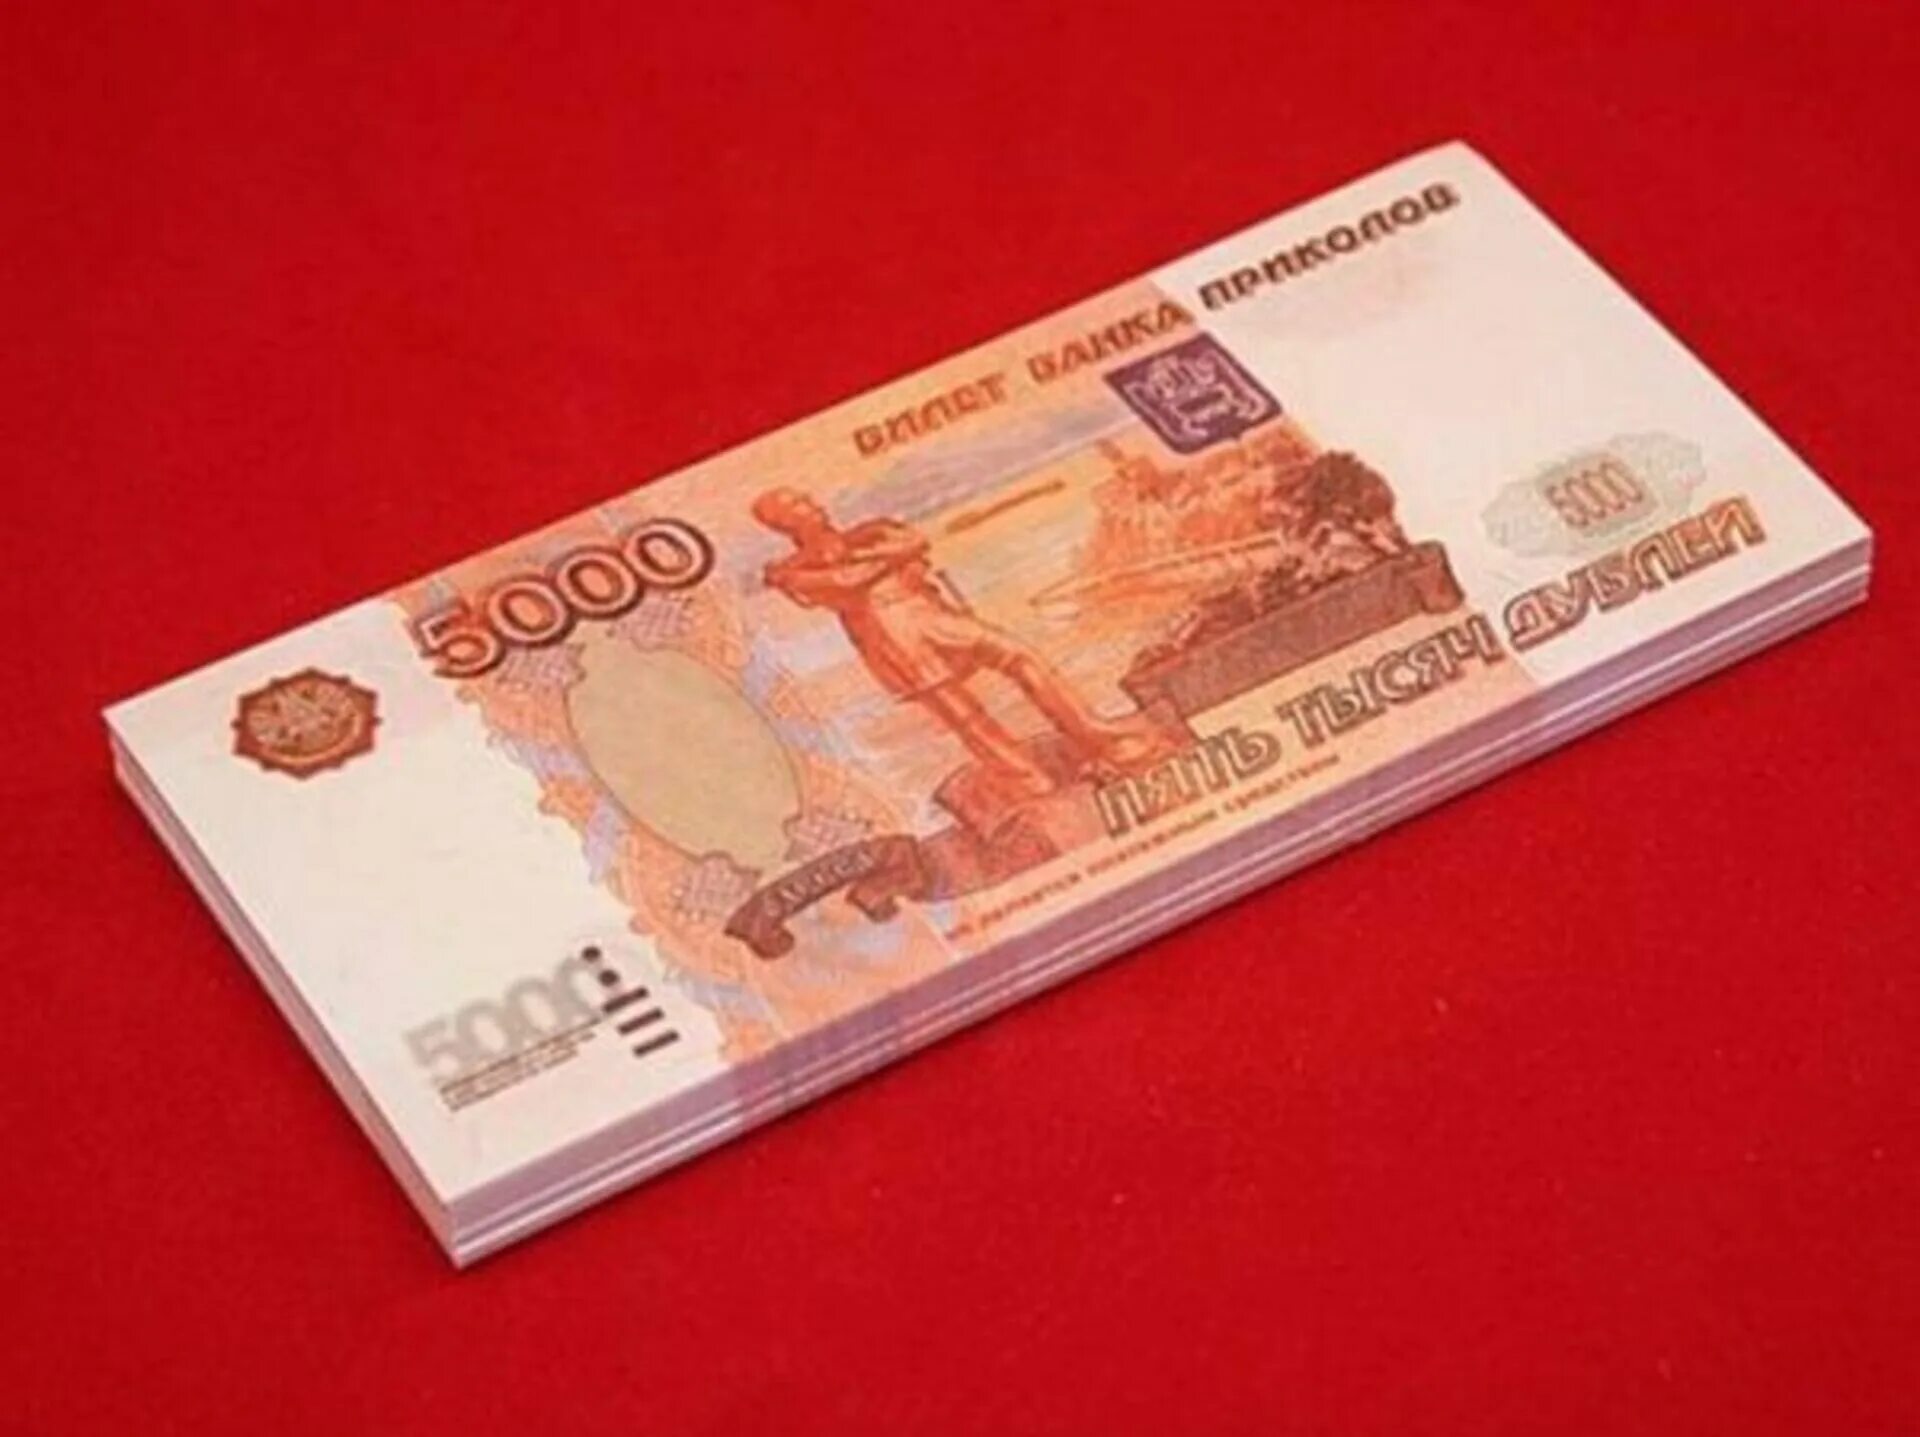 1 от 5000 рублей